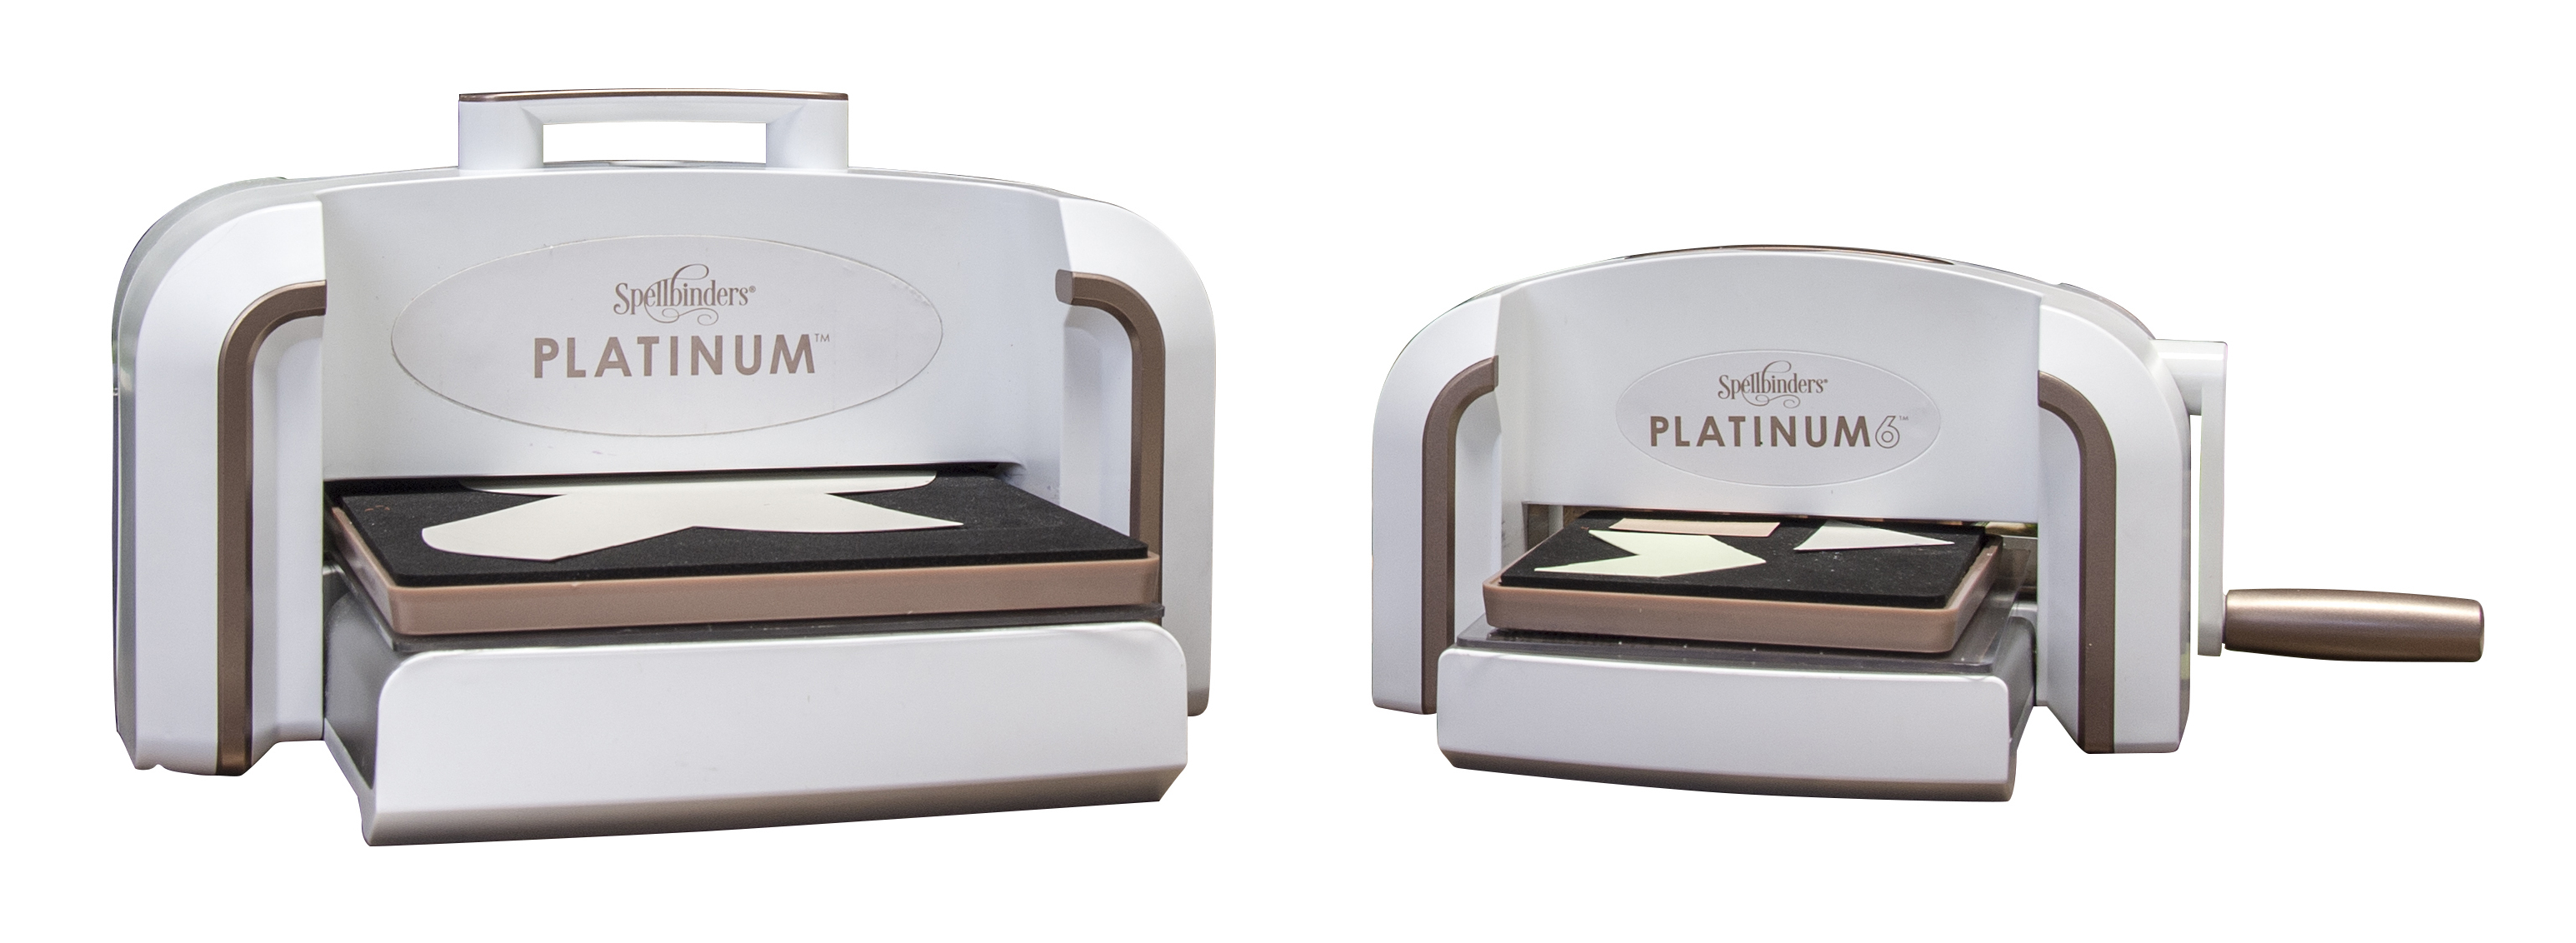  Spellbinders Platinum Die Cutting and Embossing Machine (6 Inch  Platform + Universal Plate System)